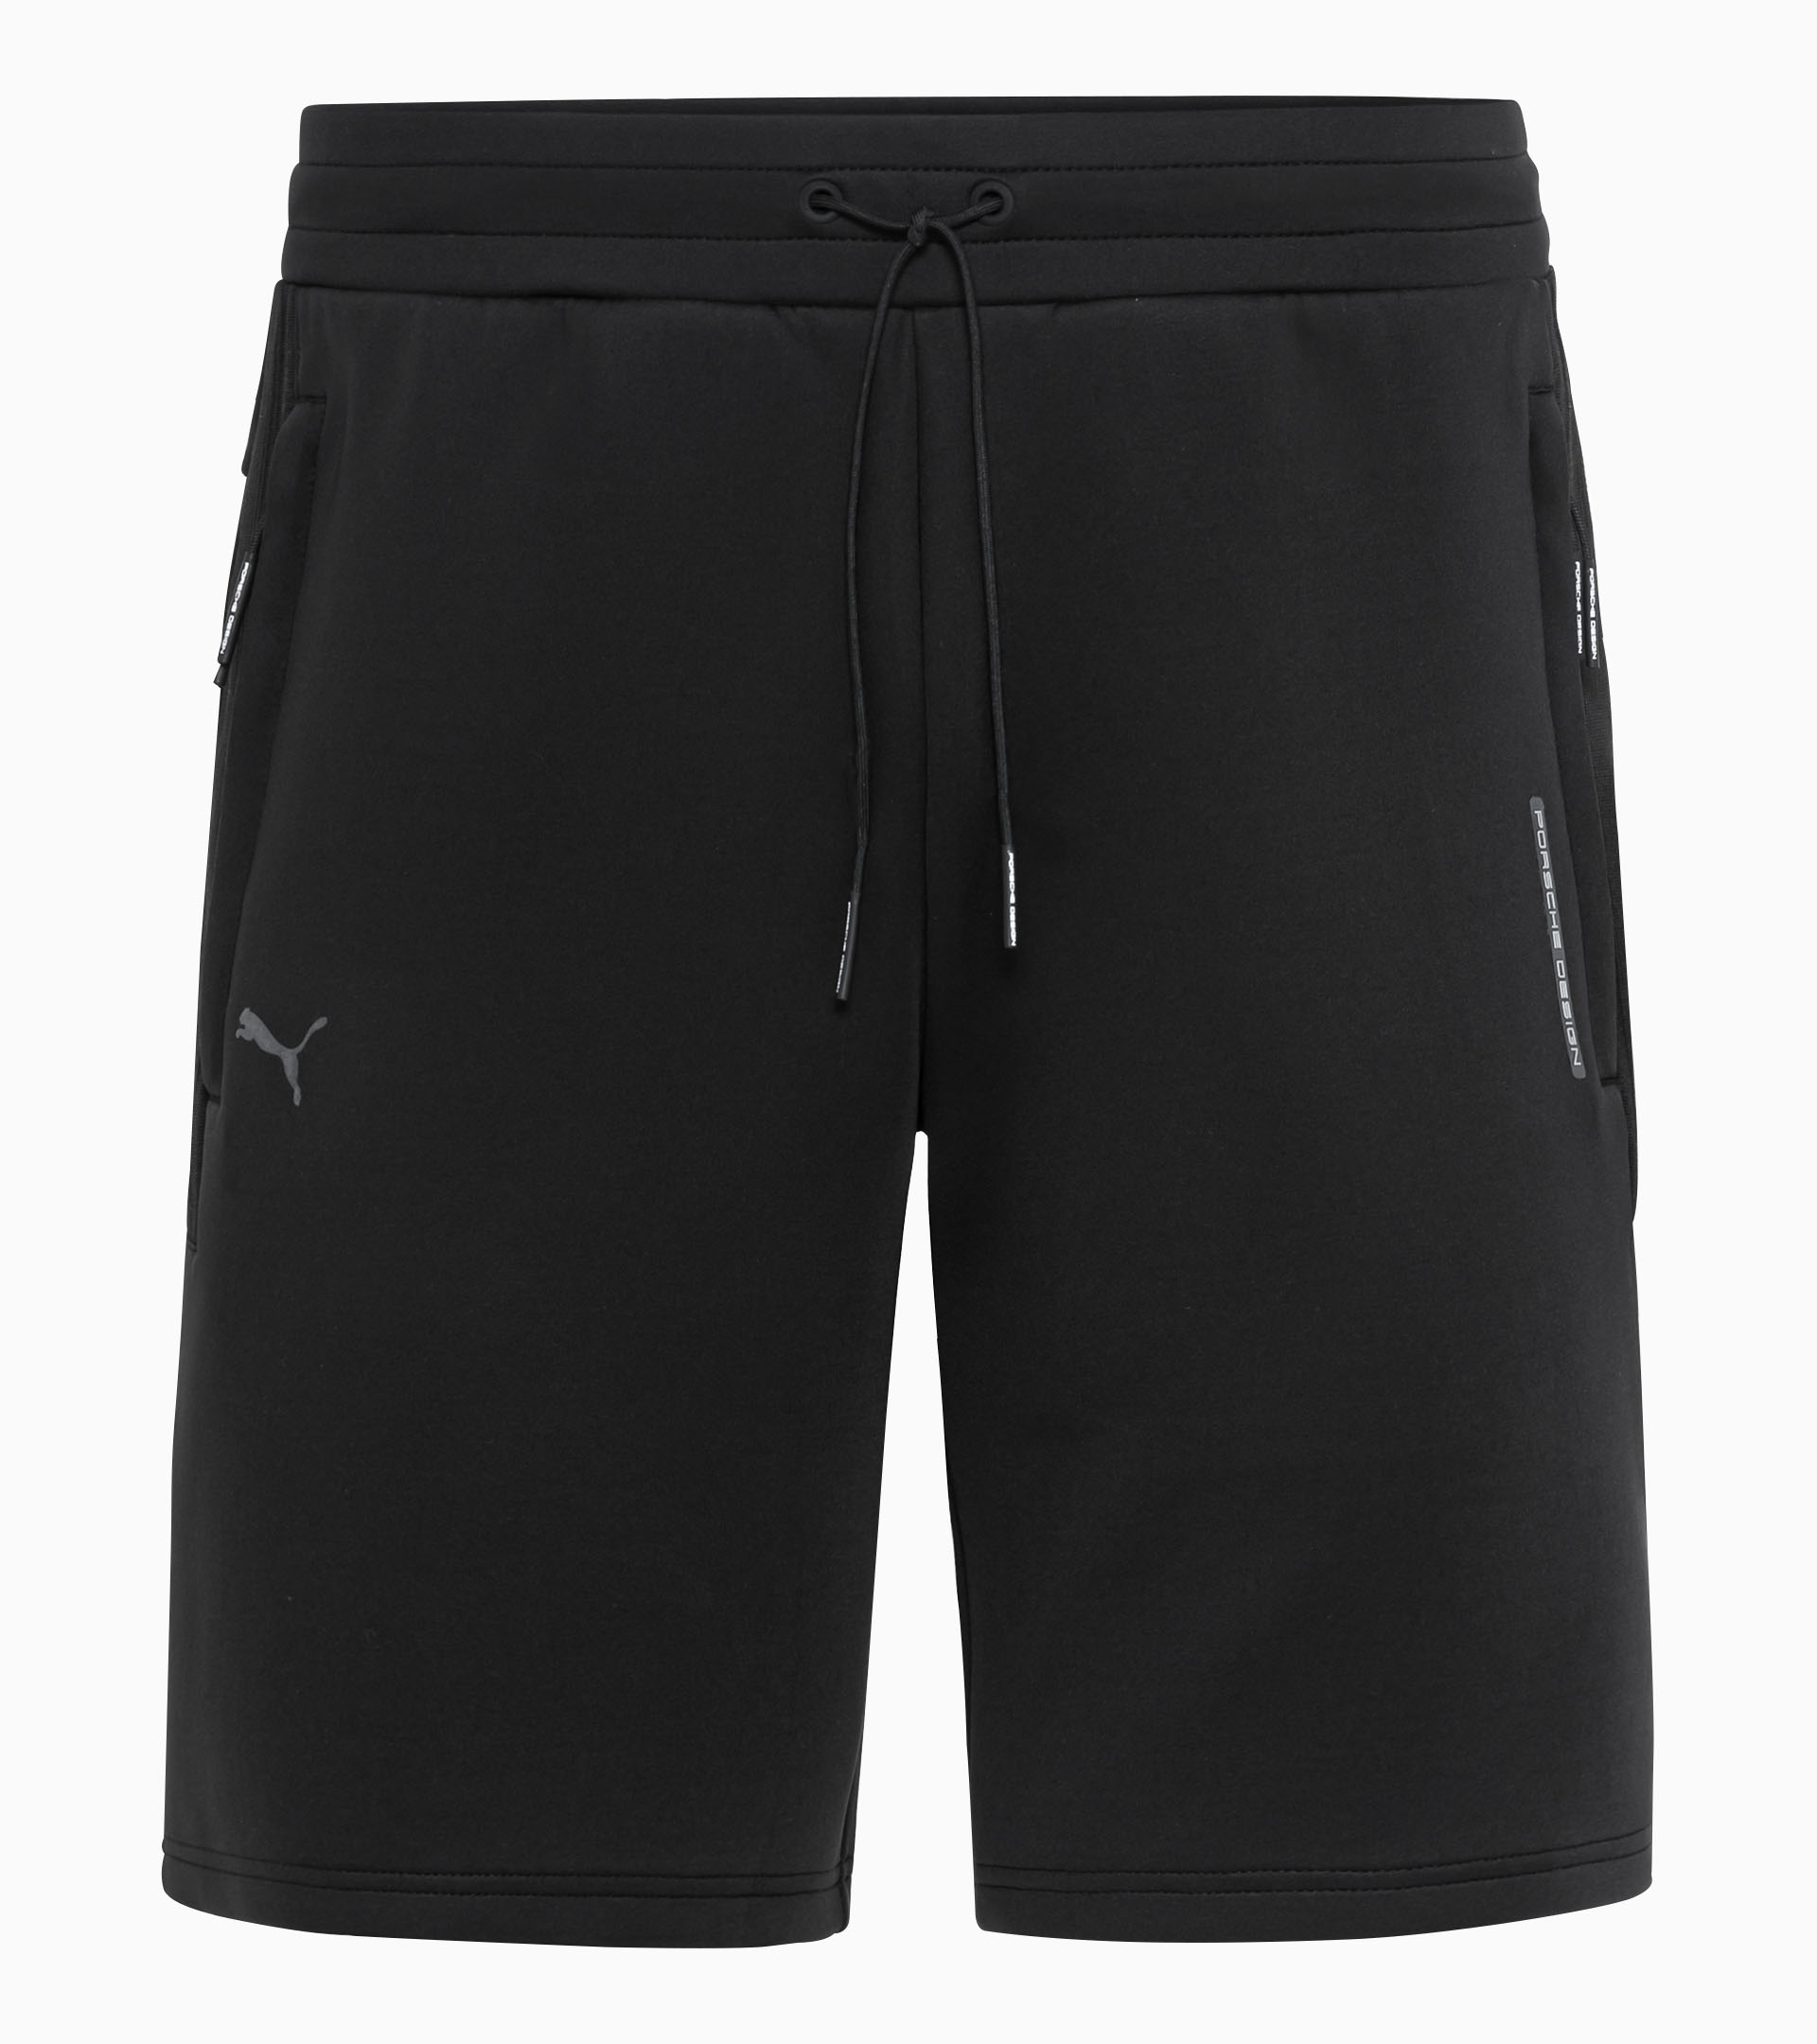 Men's Shorts Basketball Zipper Pocket Sport Shorts Gym Pants Athletic Shorts*US  | eBay